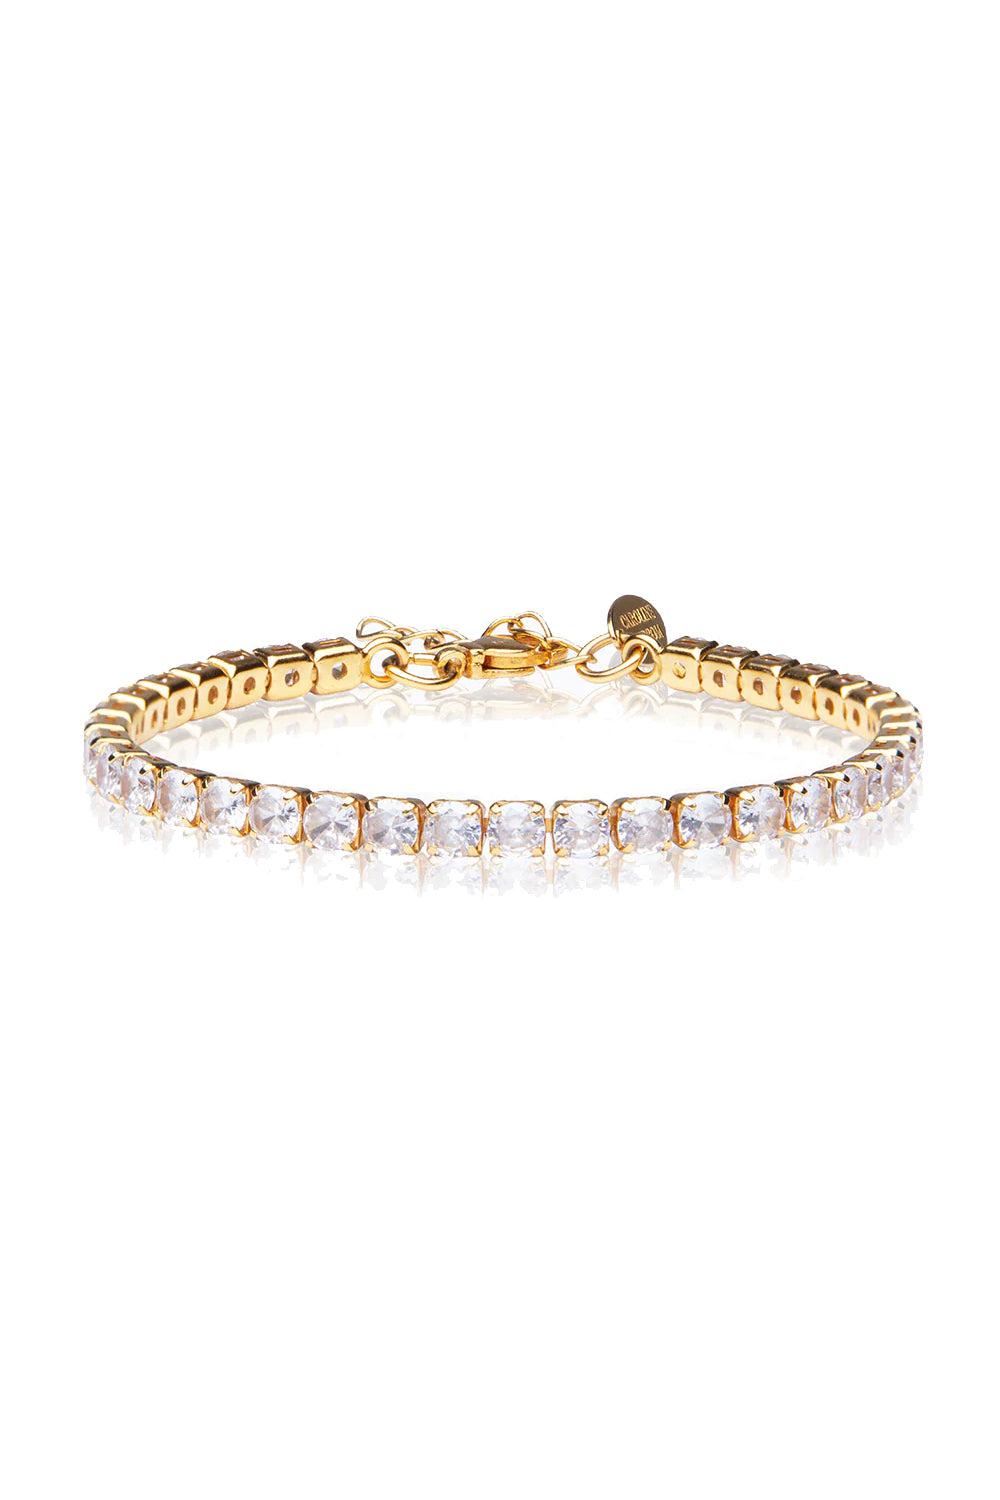 Zara Braclet Gold Crystal